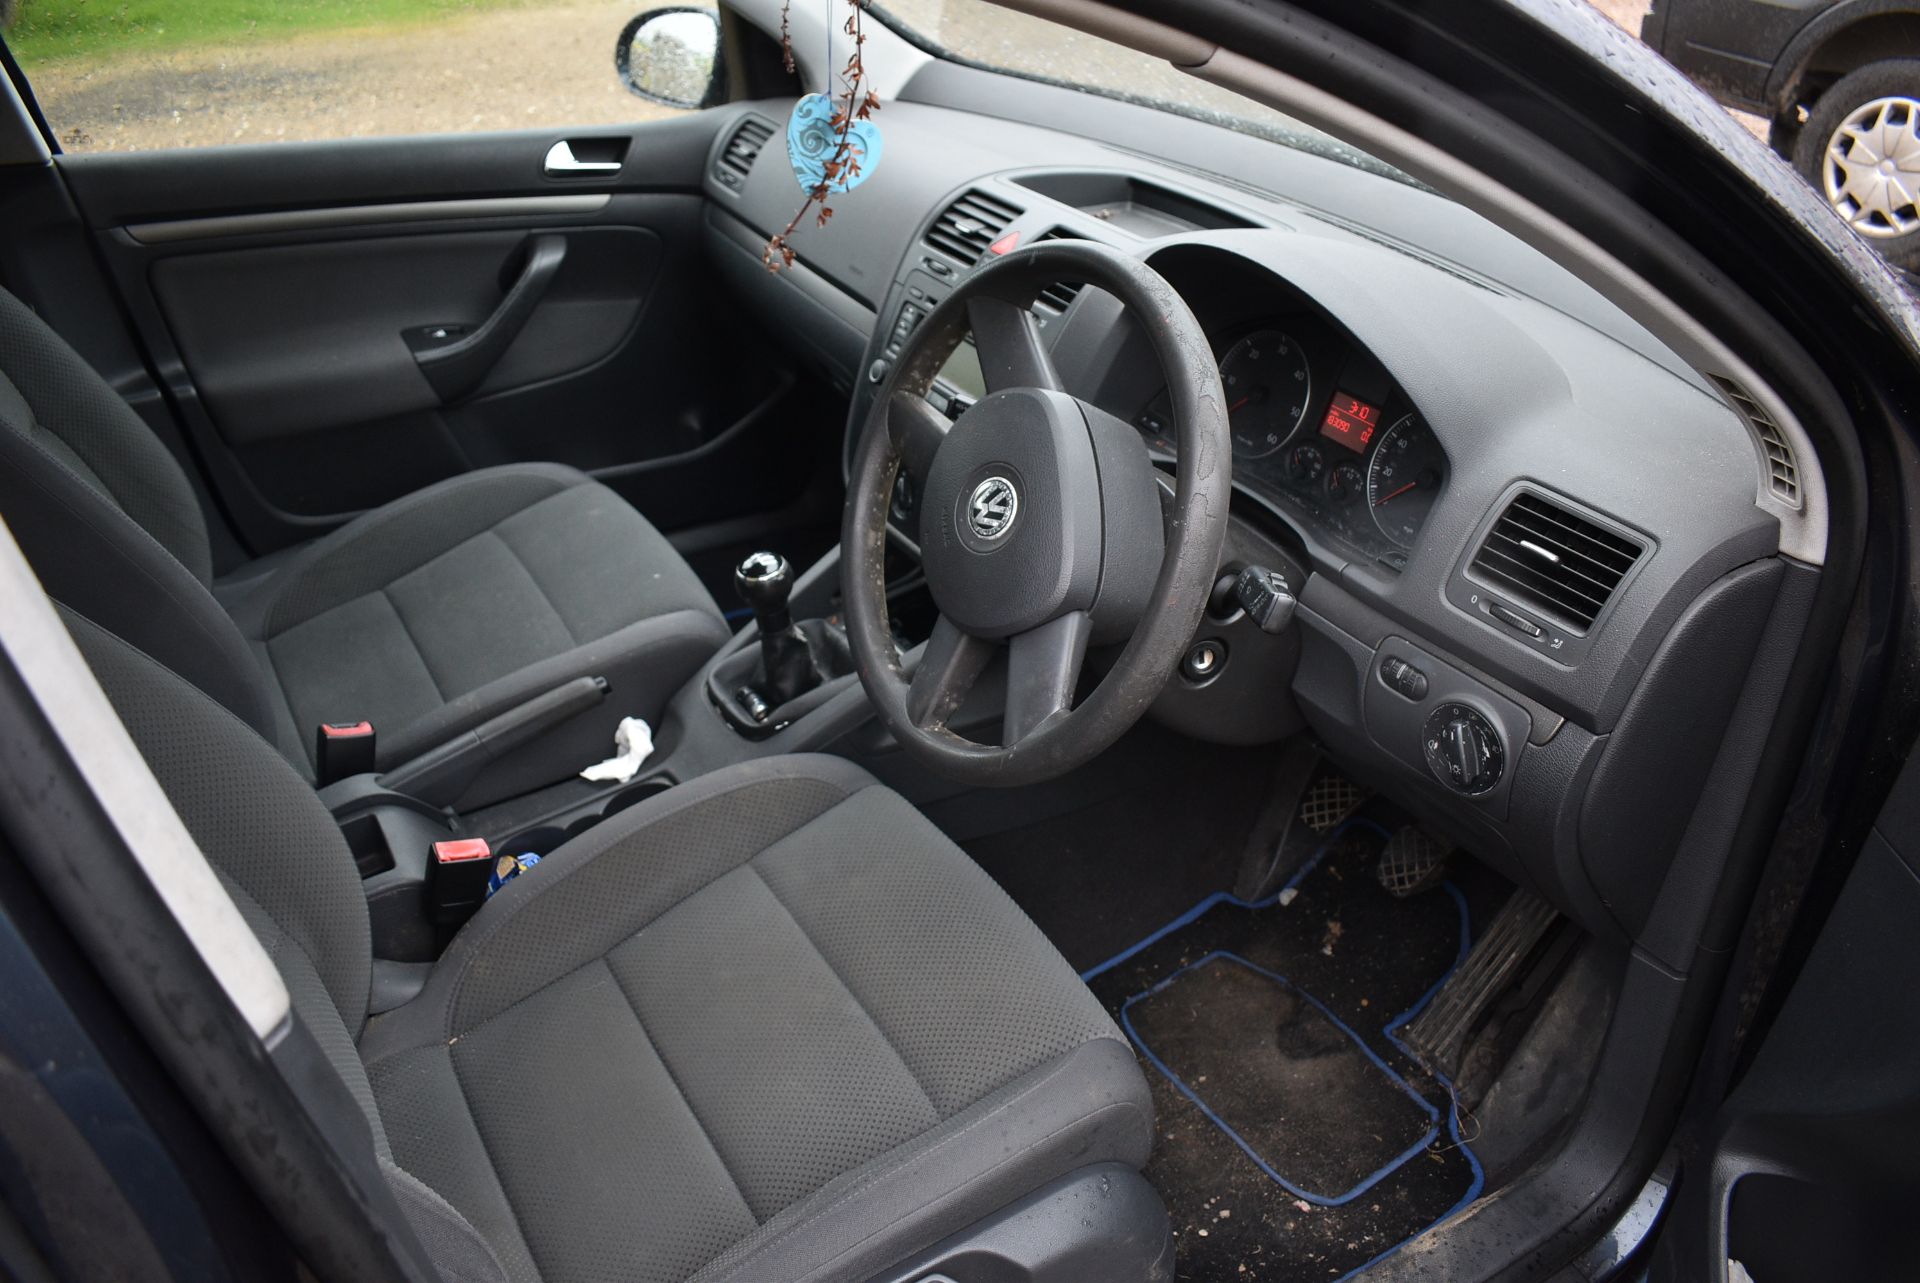 Volkswagen Golf TDI SE 5-Door Hatchback Reg: WR04 LCE, Mileage: 183090 - Image 4 of 13